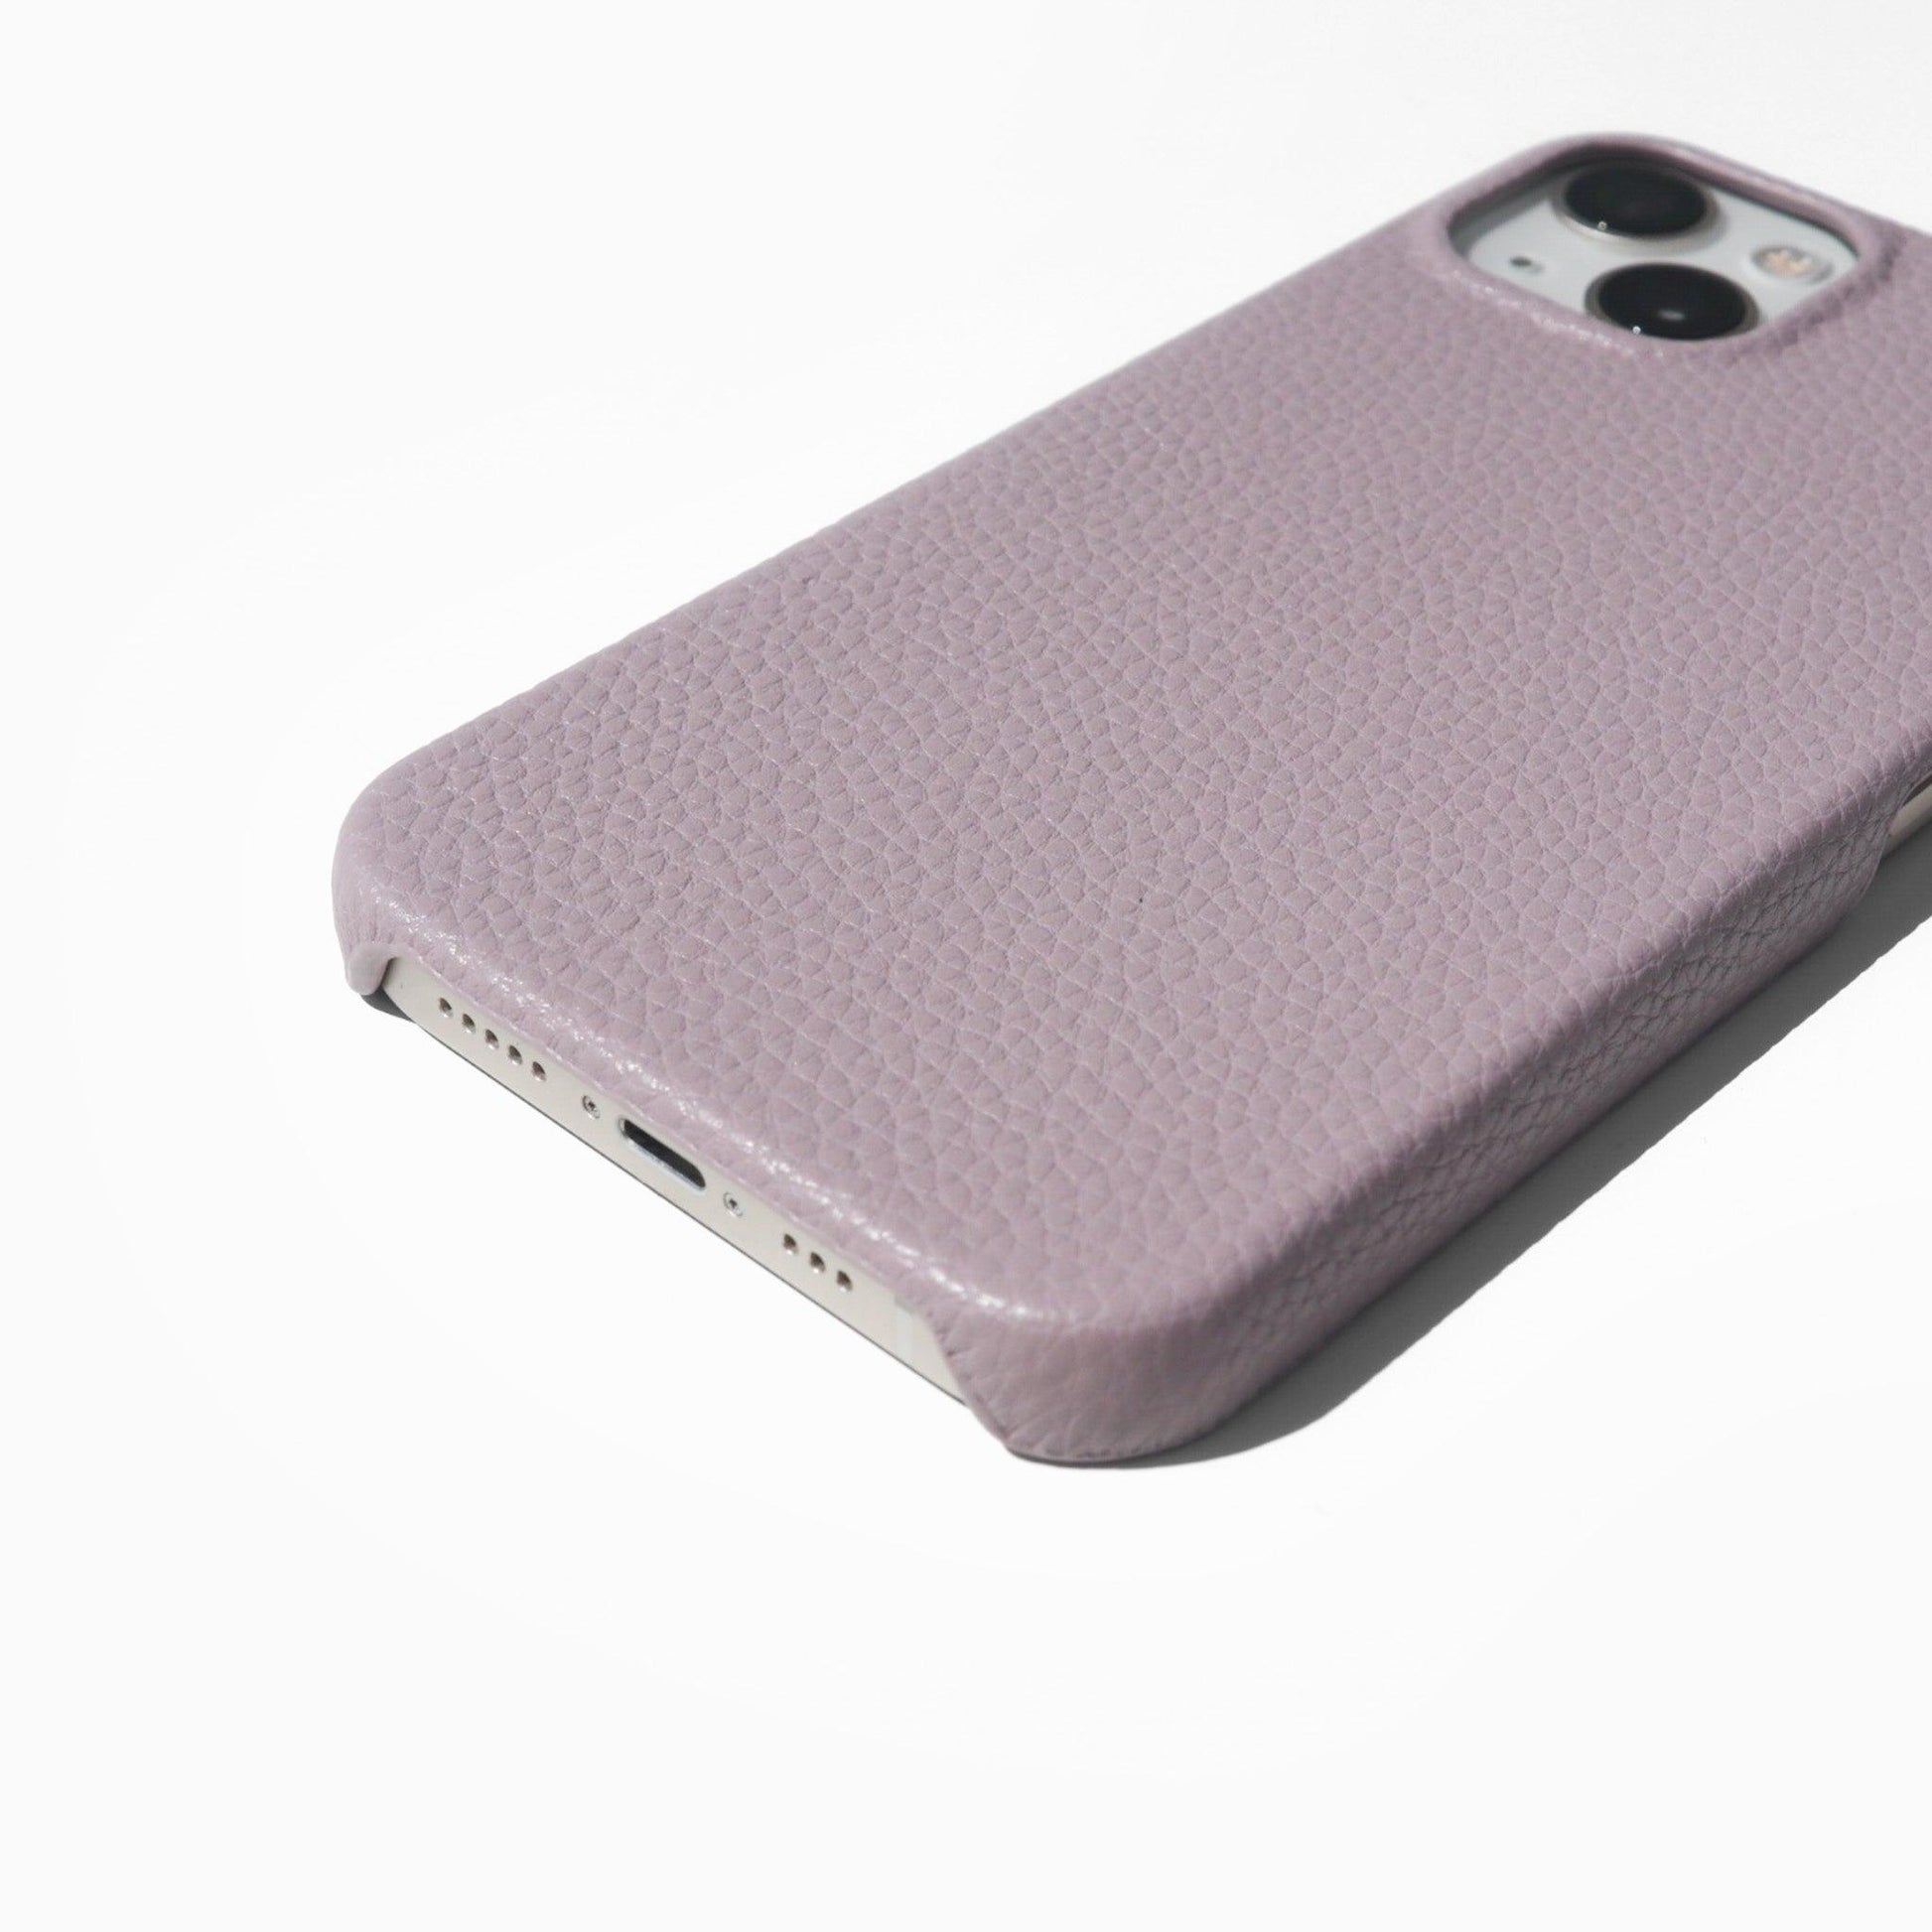 iPhone Thin Case - Lavender Purple